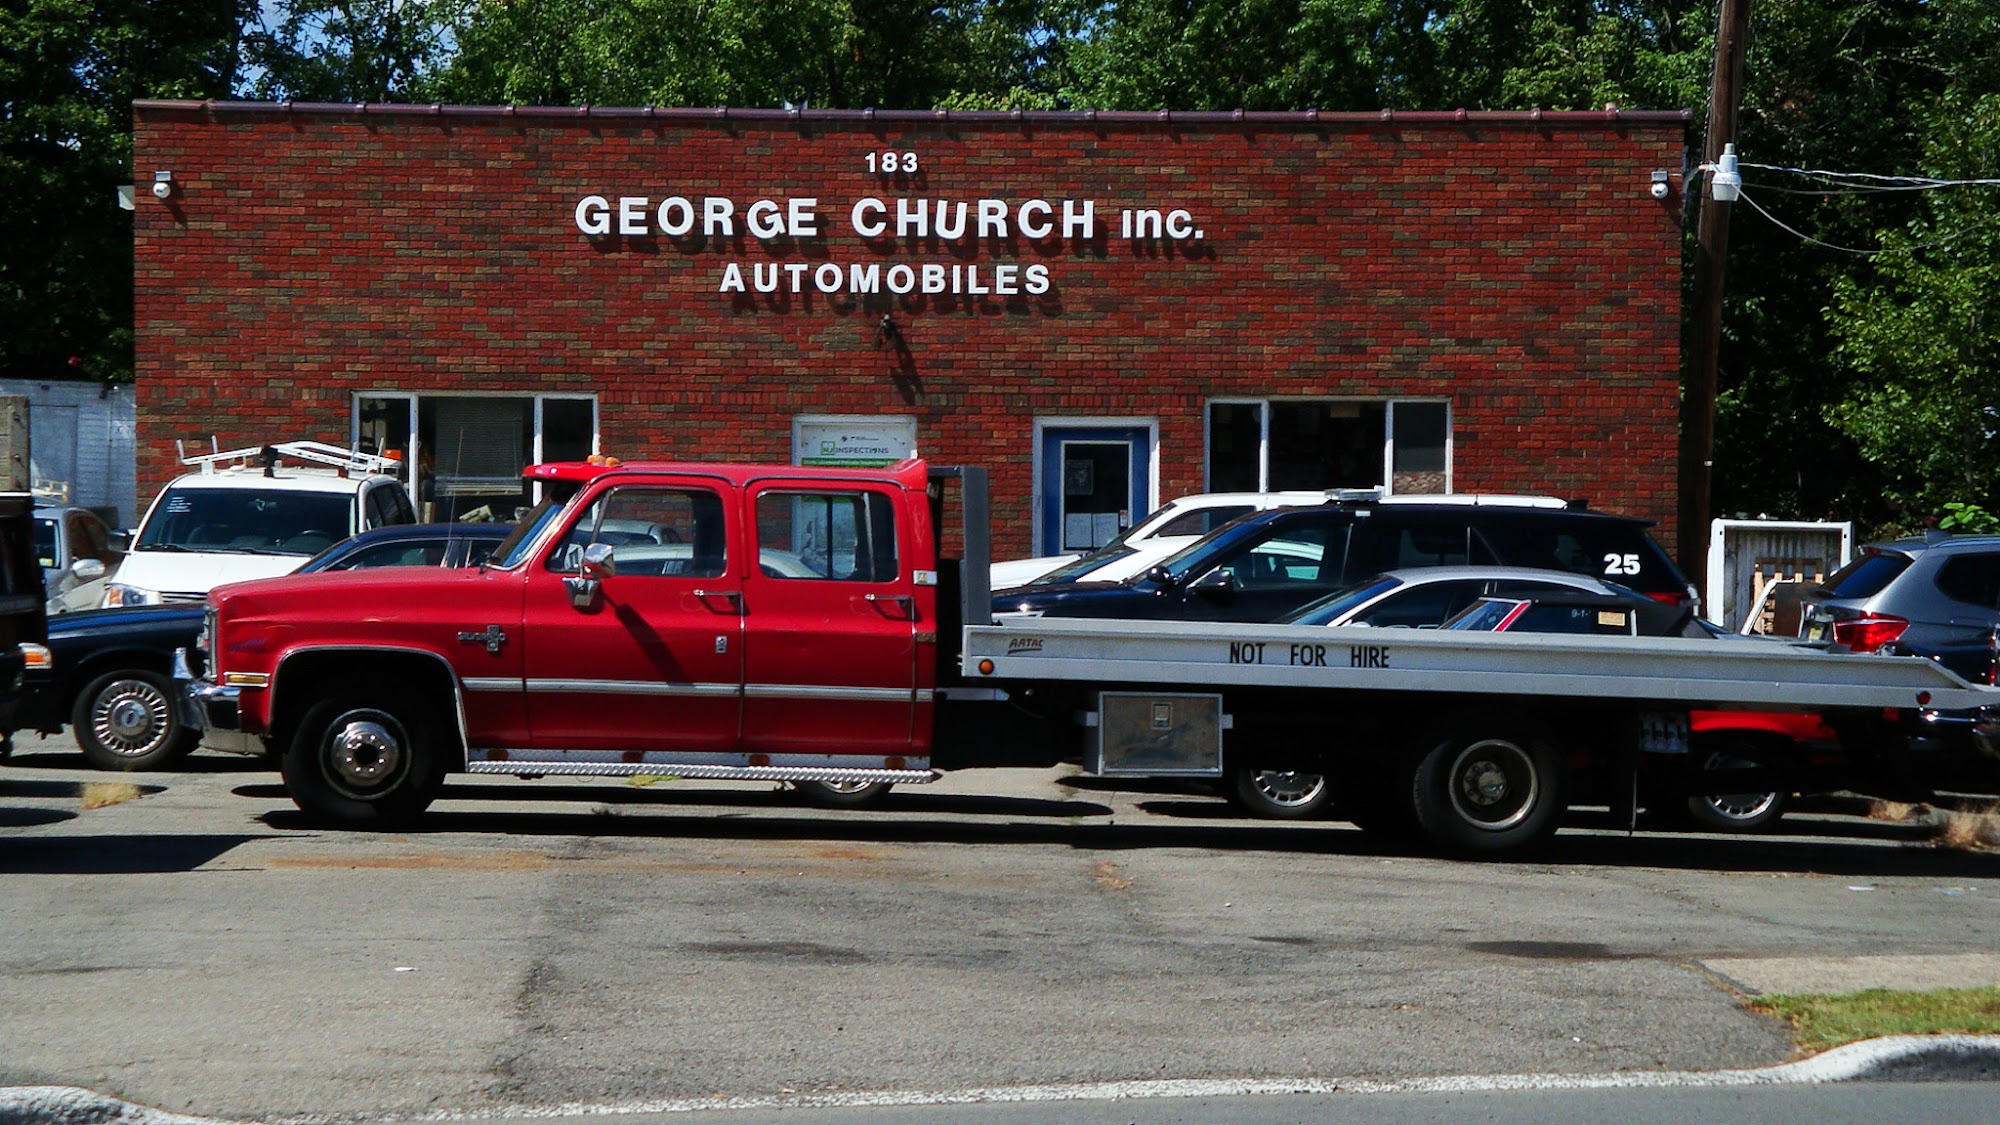 GEORGE CHURCH INC